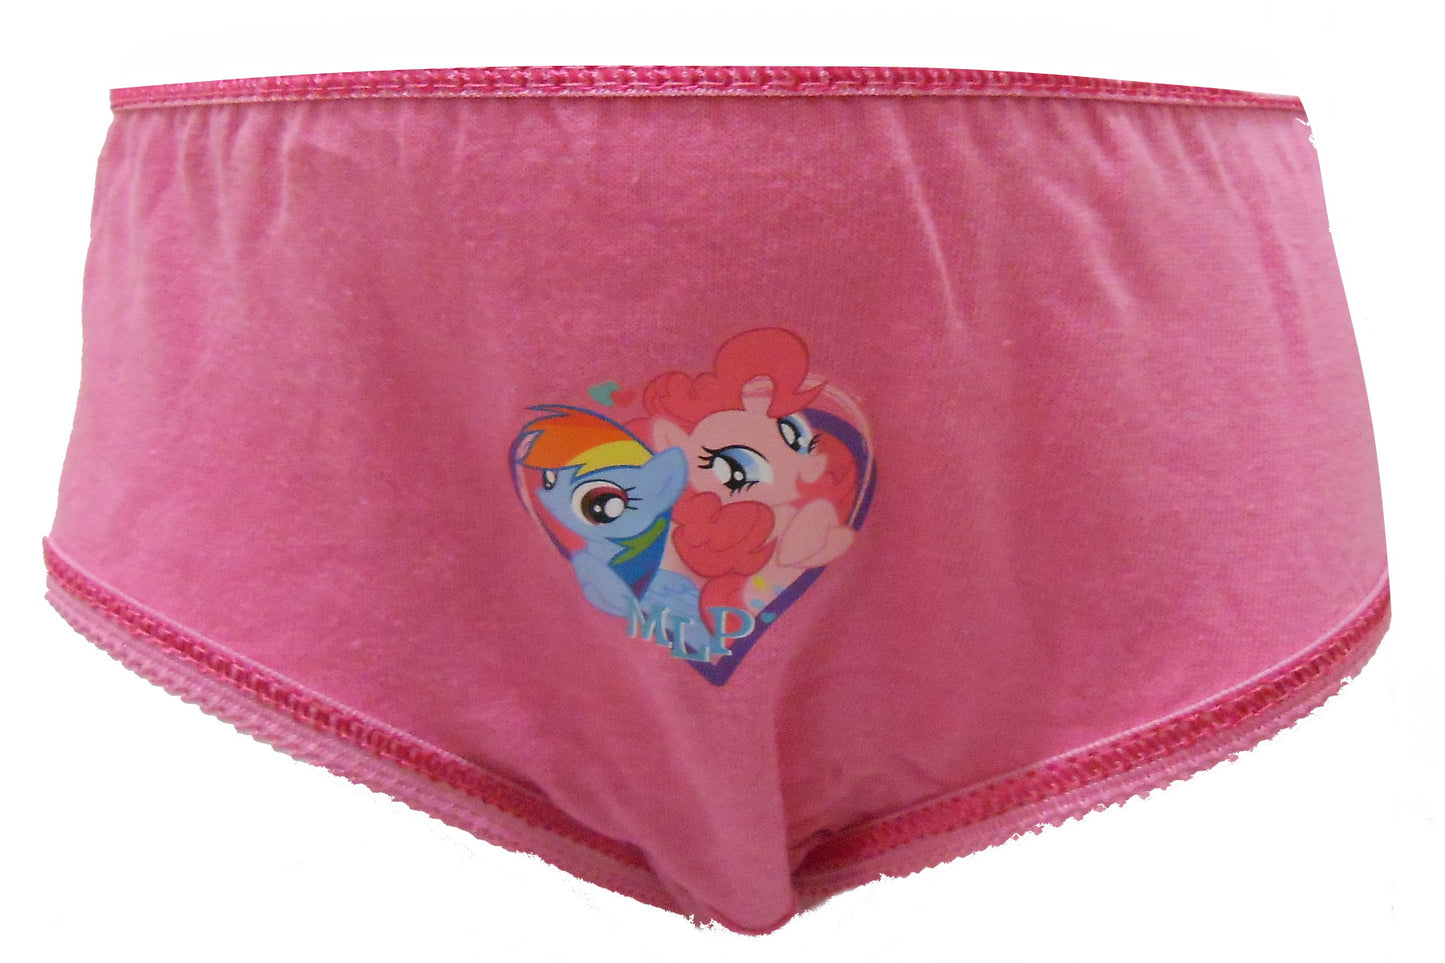 My Little Pony "Friendship" Girls 6 Pack Knickers Briefs